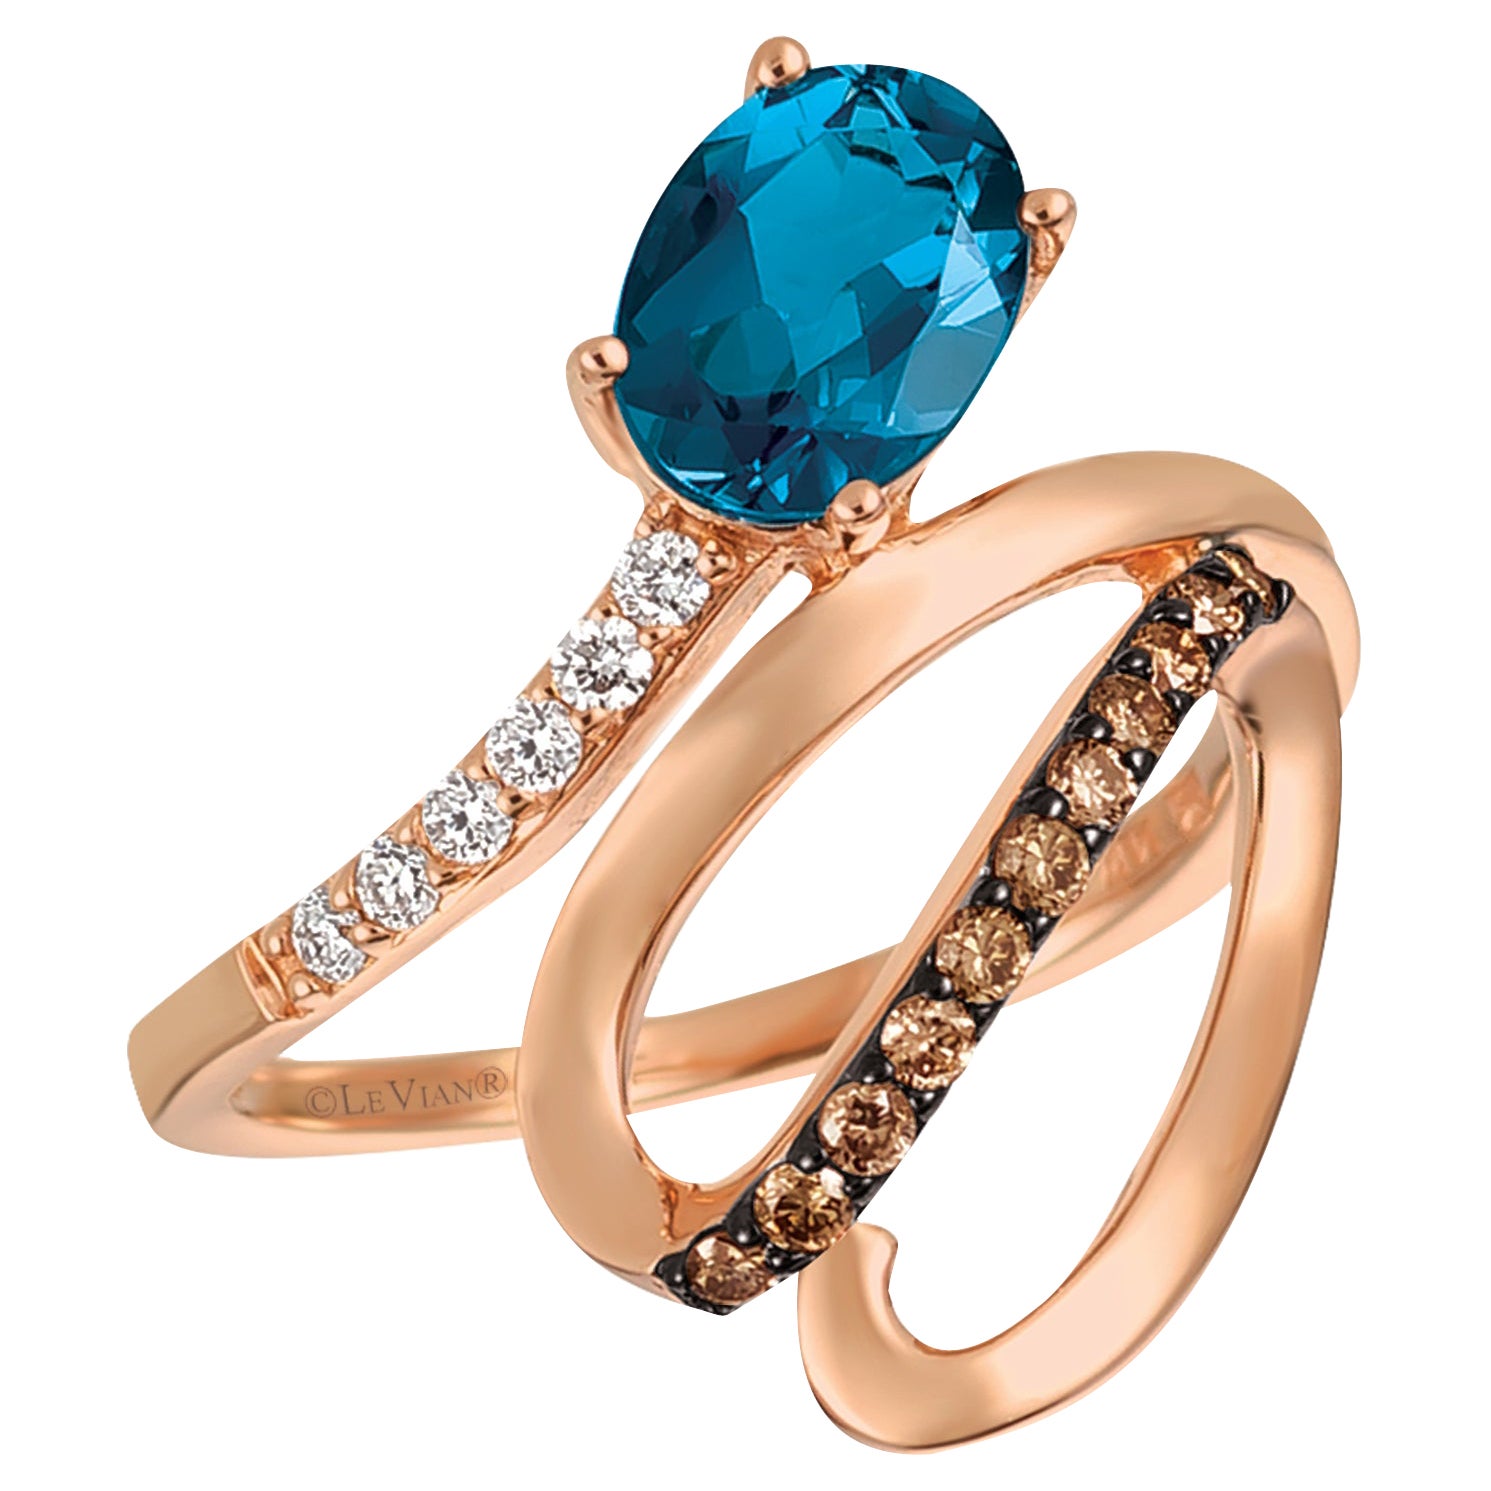 LeVian Ring Blue Topaz Chocolate Diamonds Vanilla Diamonds 14K Rose Gold